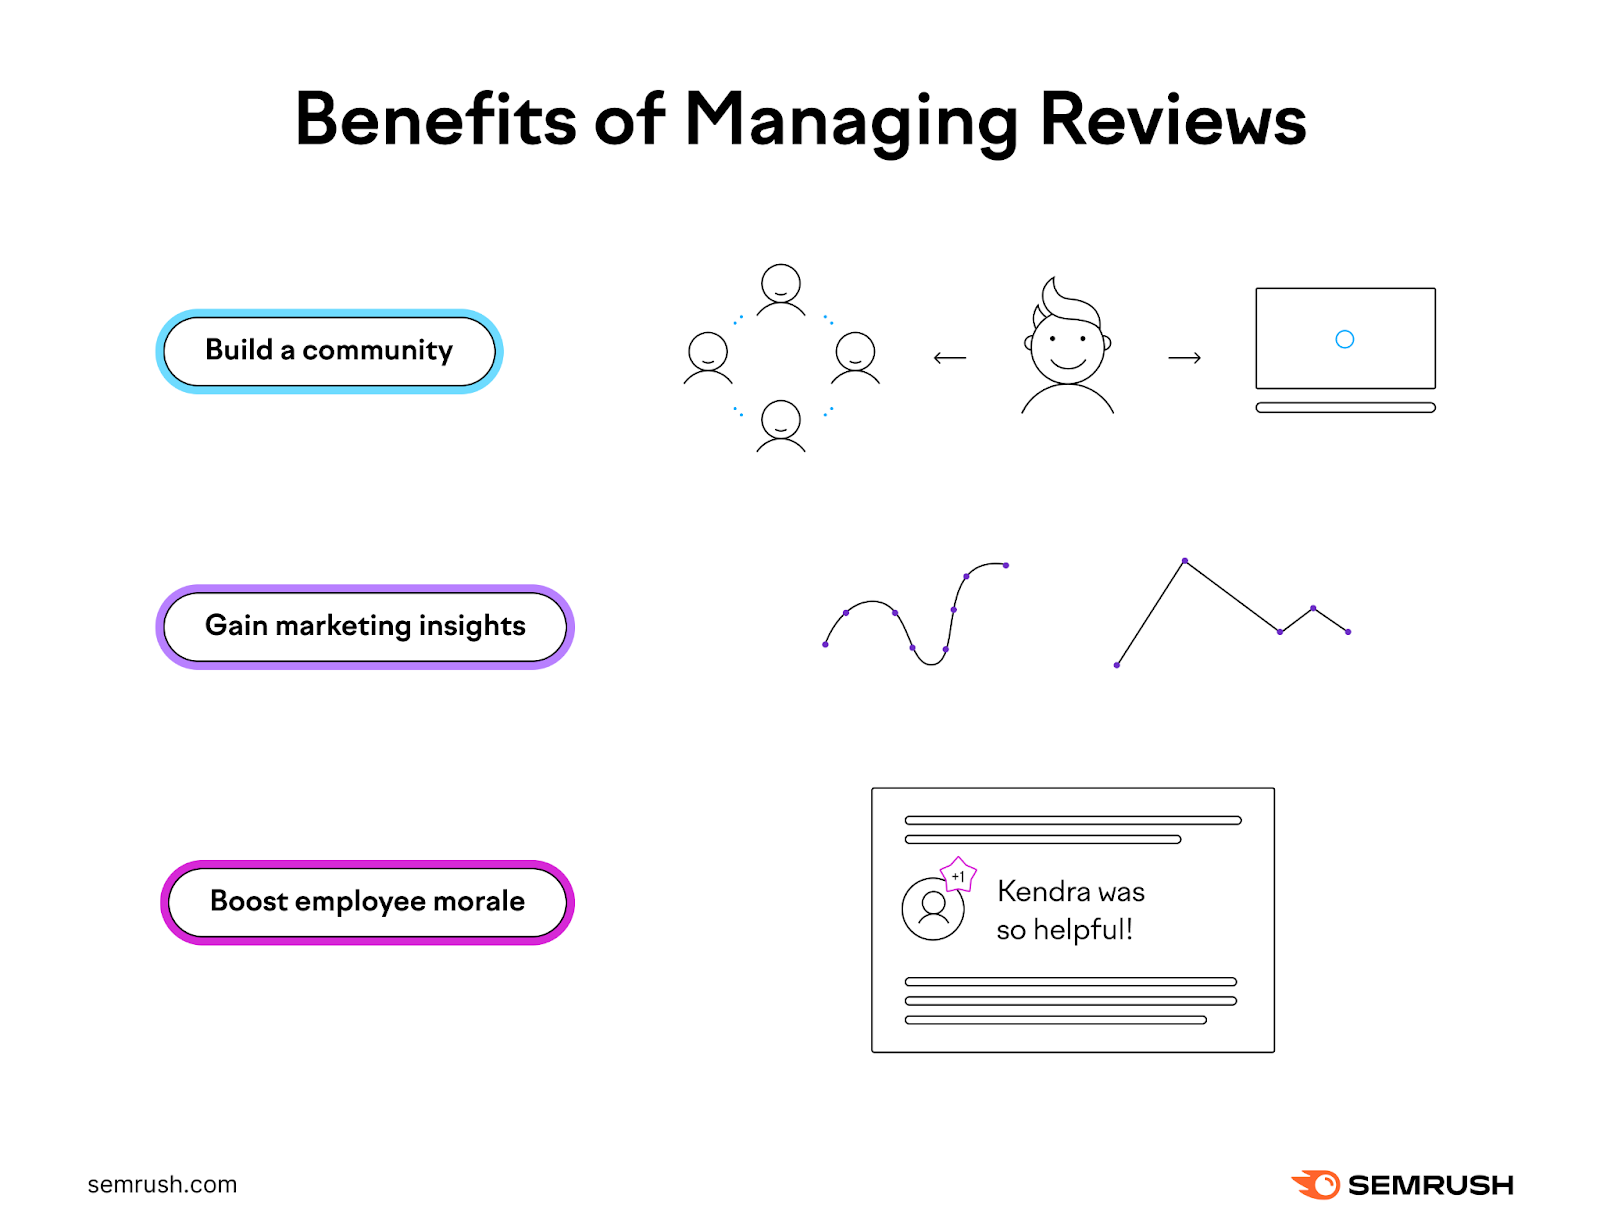 Benefits of managing reviews